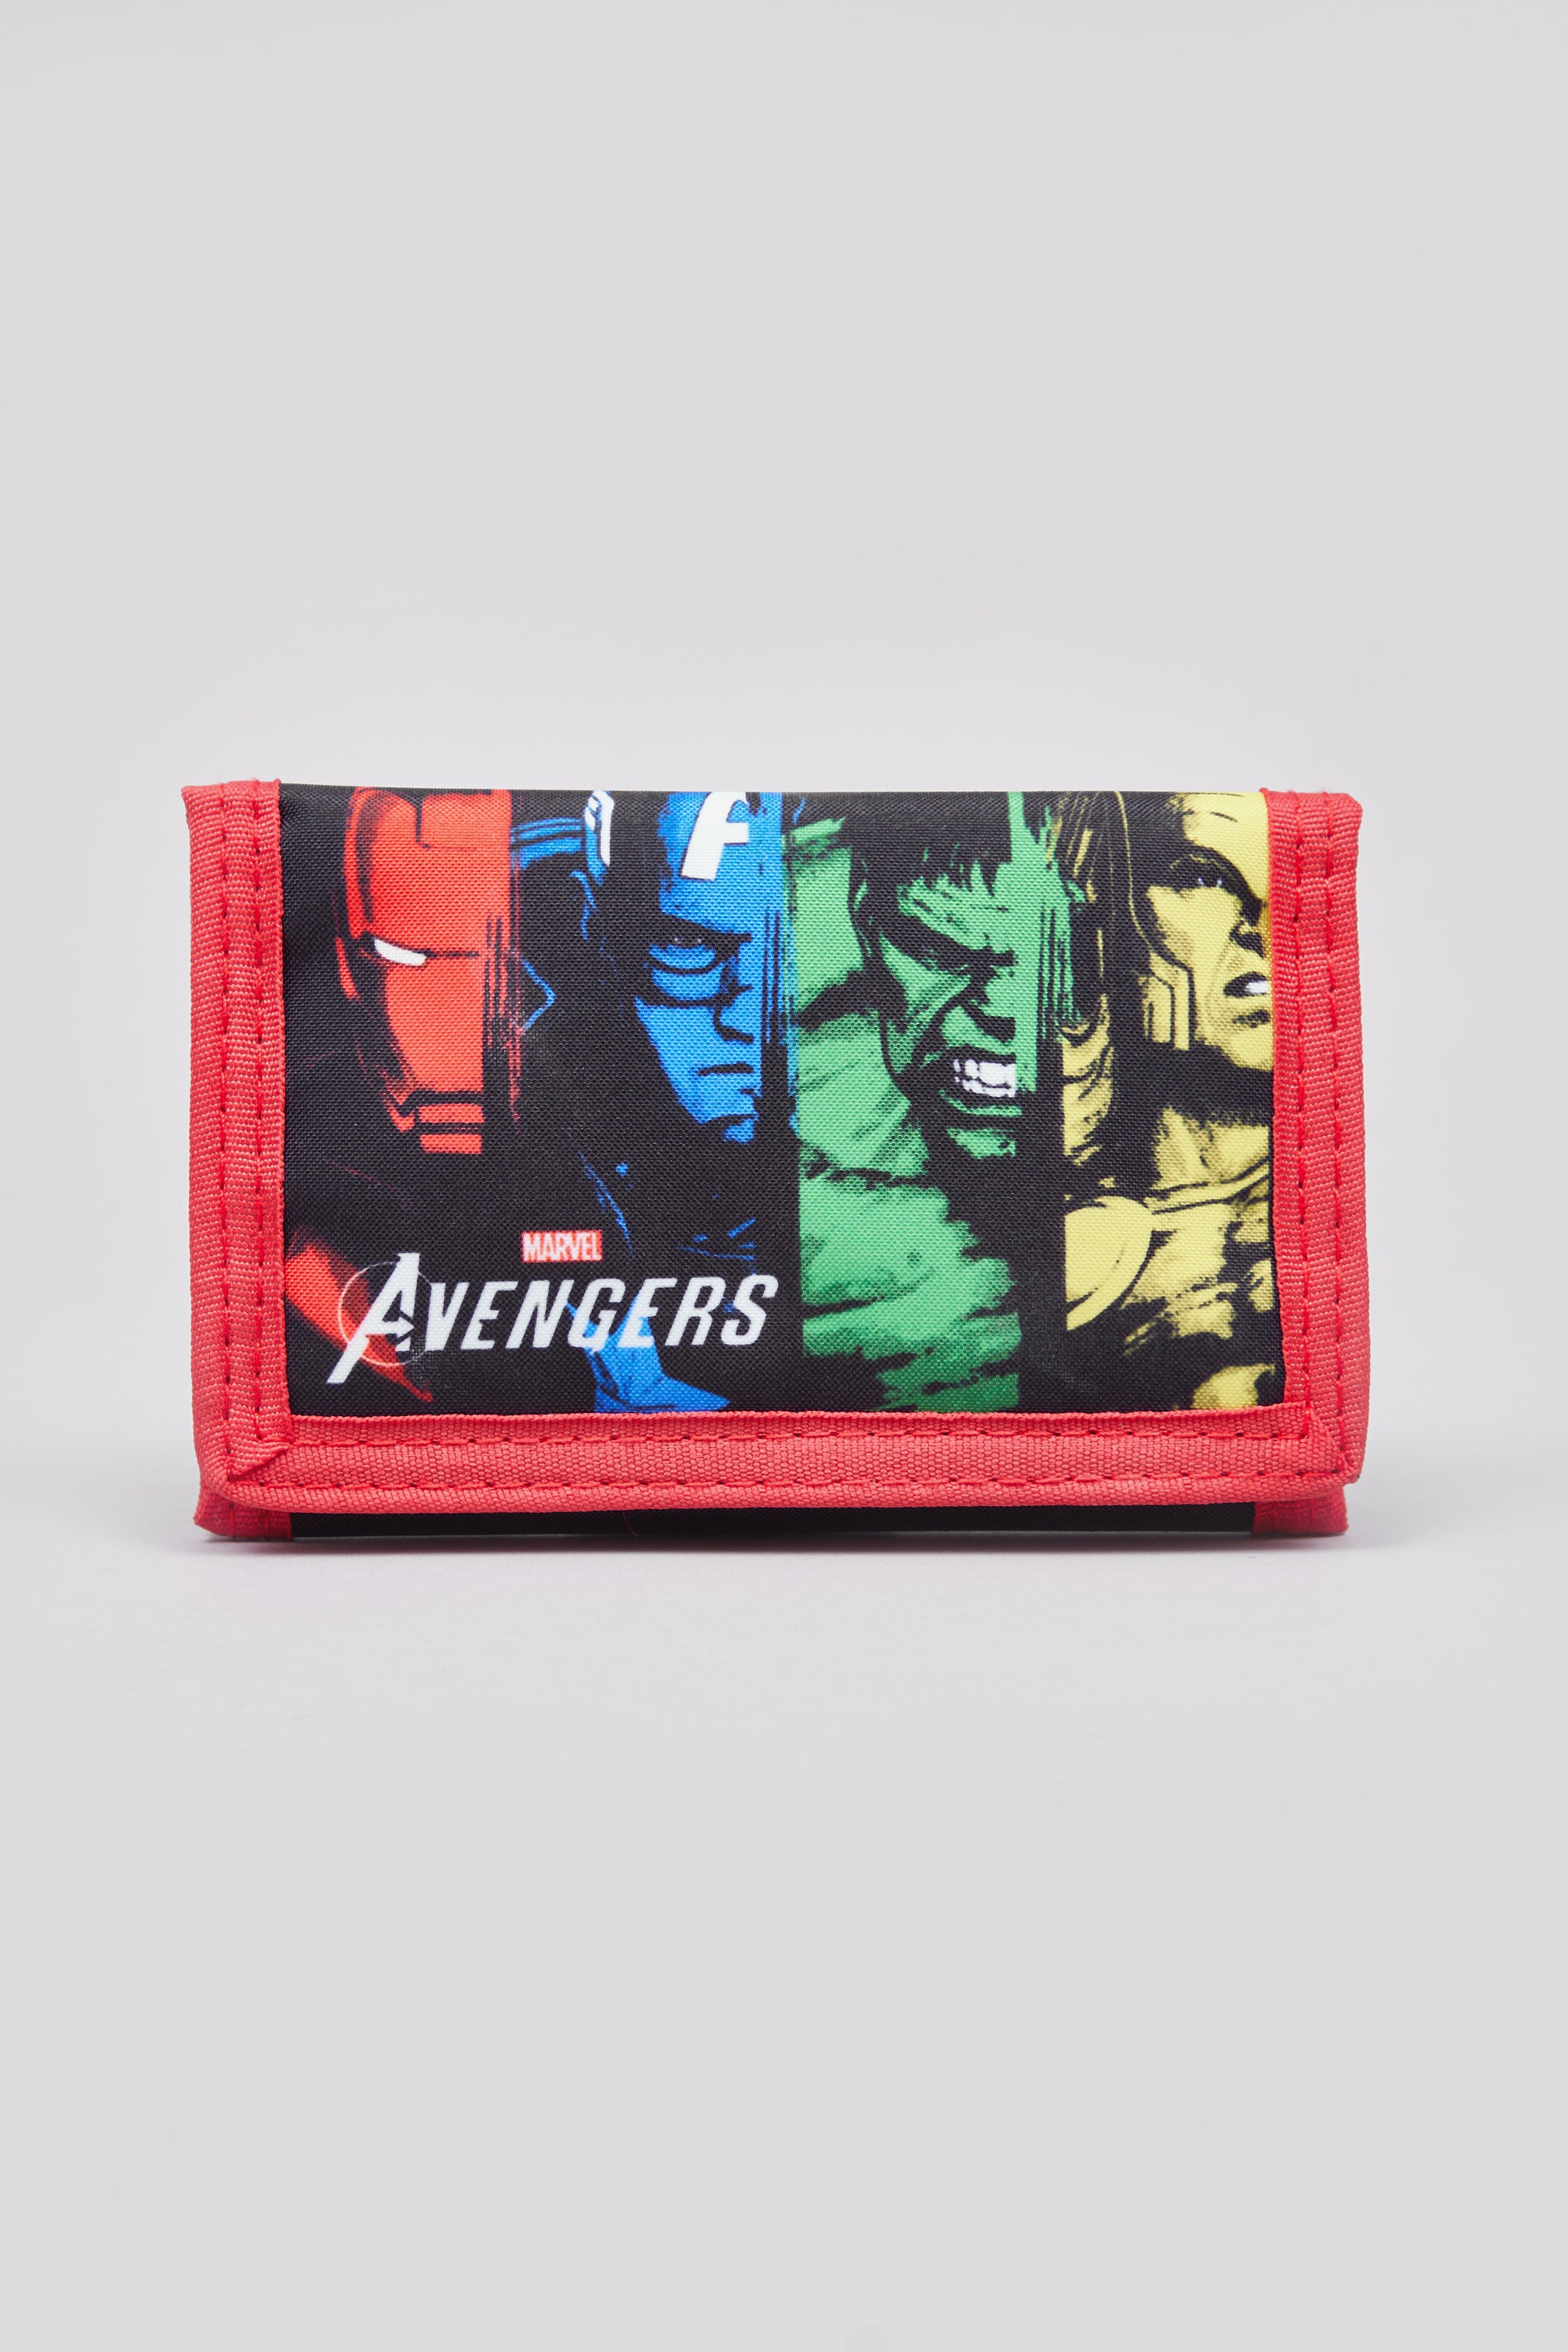 Marvel Avengers Wallet Kids Coin Bag Tri-Fold Boy Licensed Product